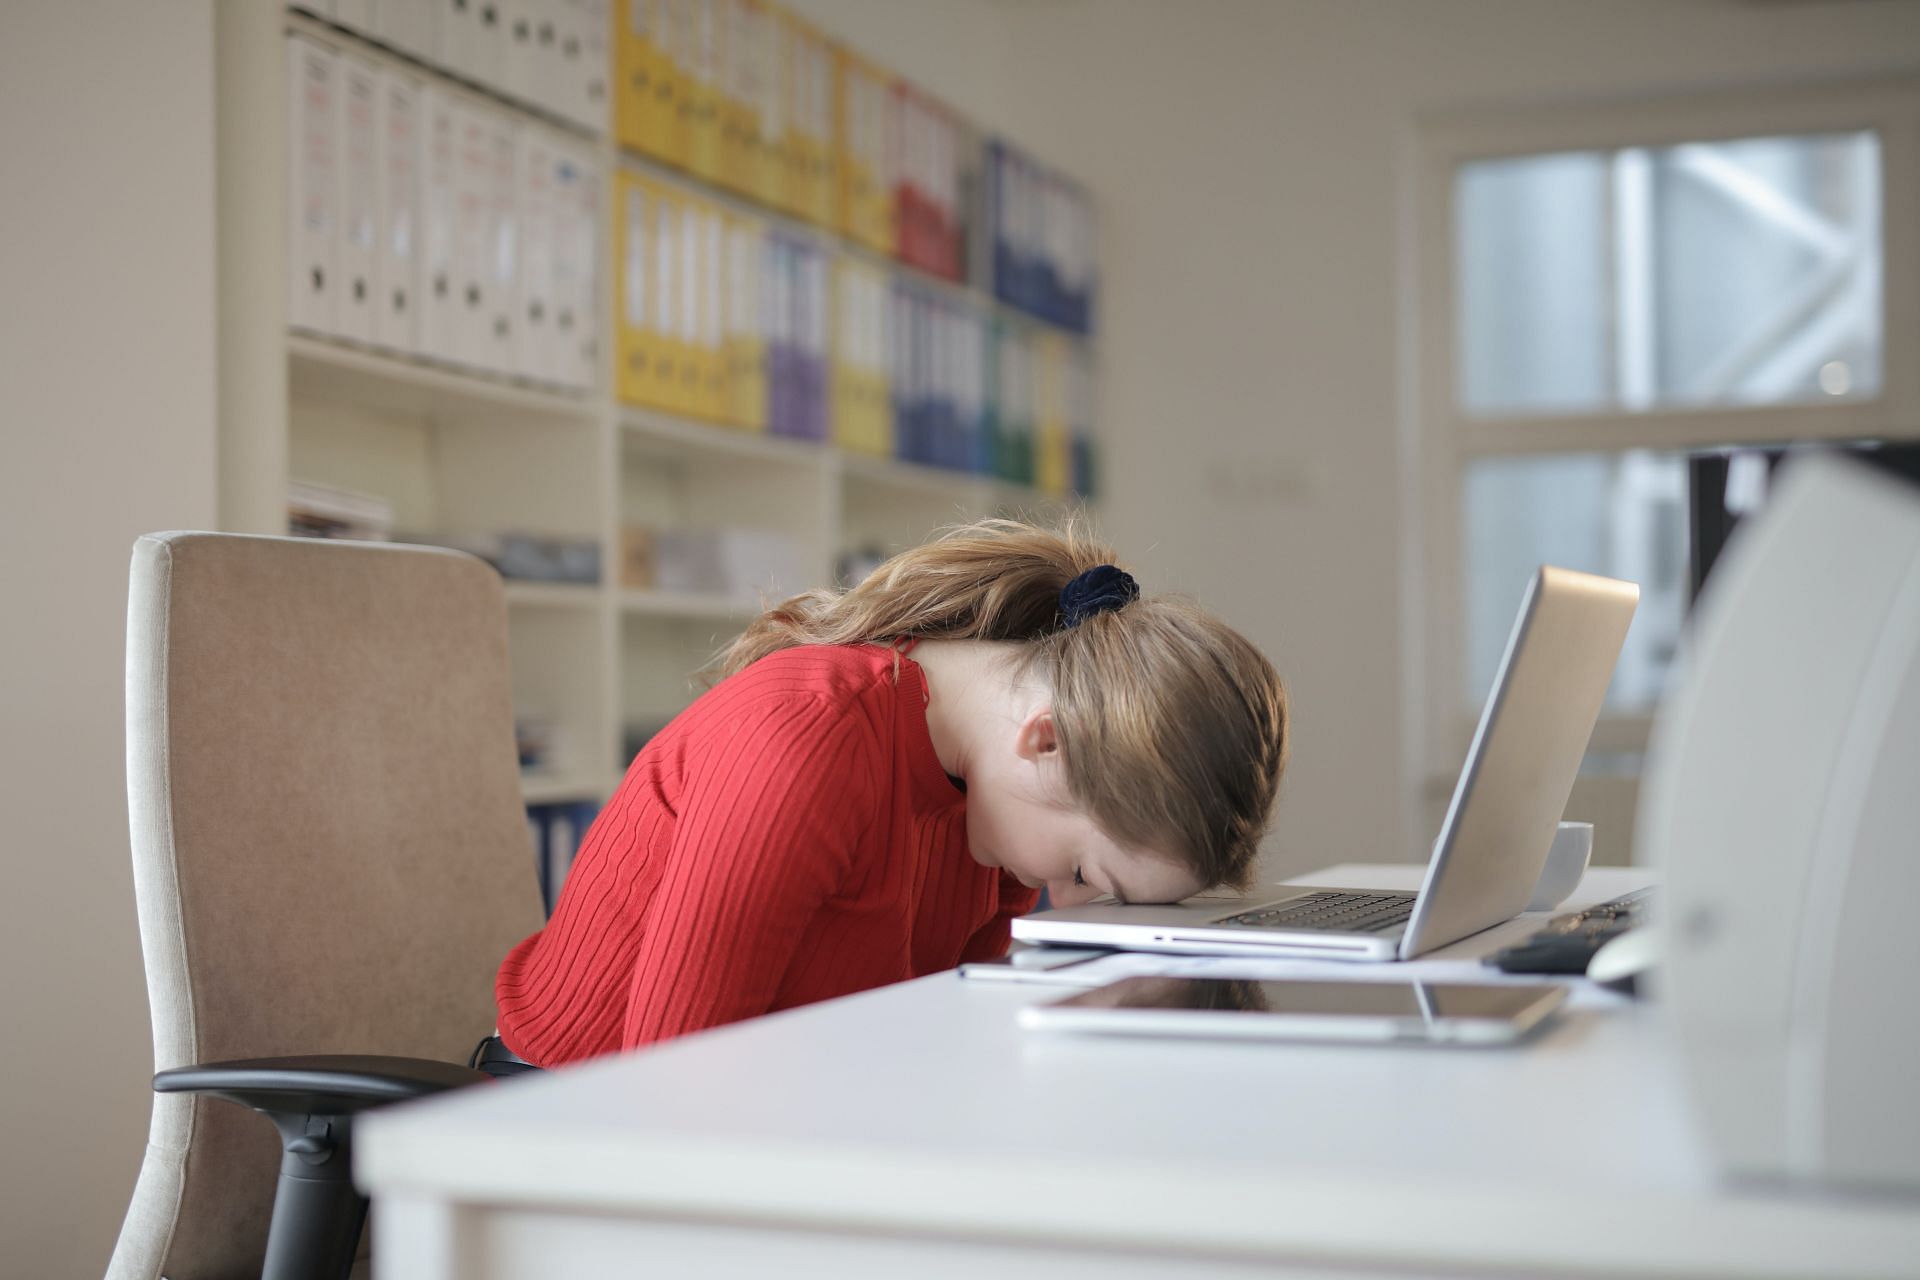 Sleepiness among Side-effects of Melatonin (Image sourced via Pexels / Photo by piacquadio)